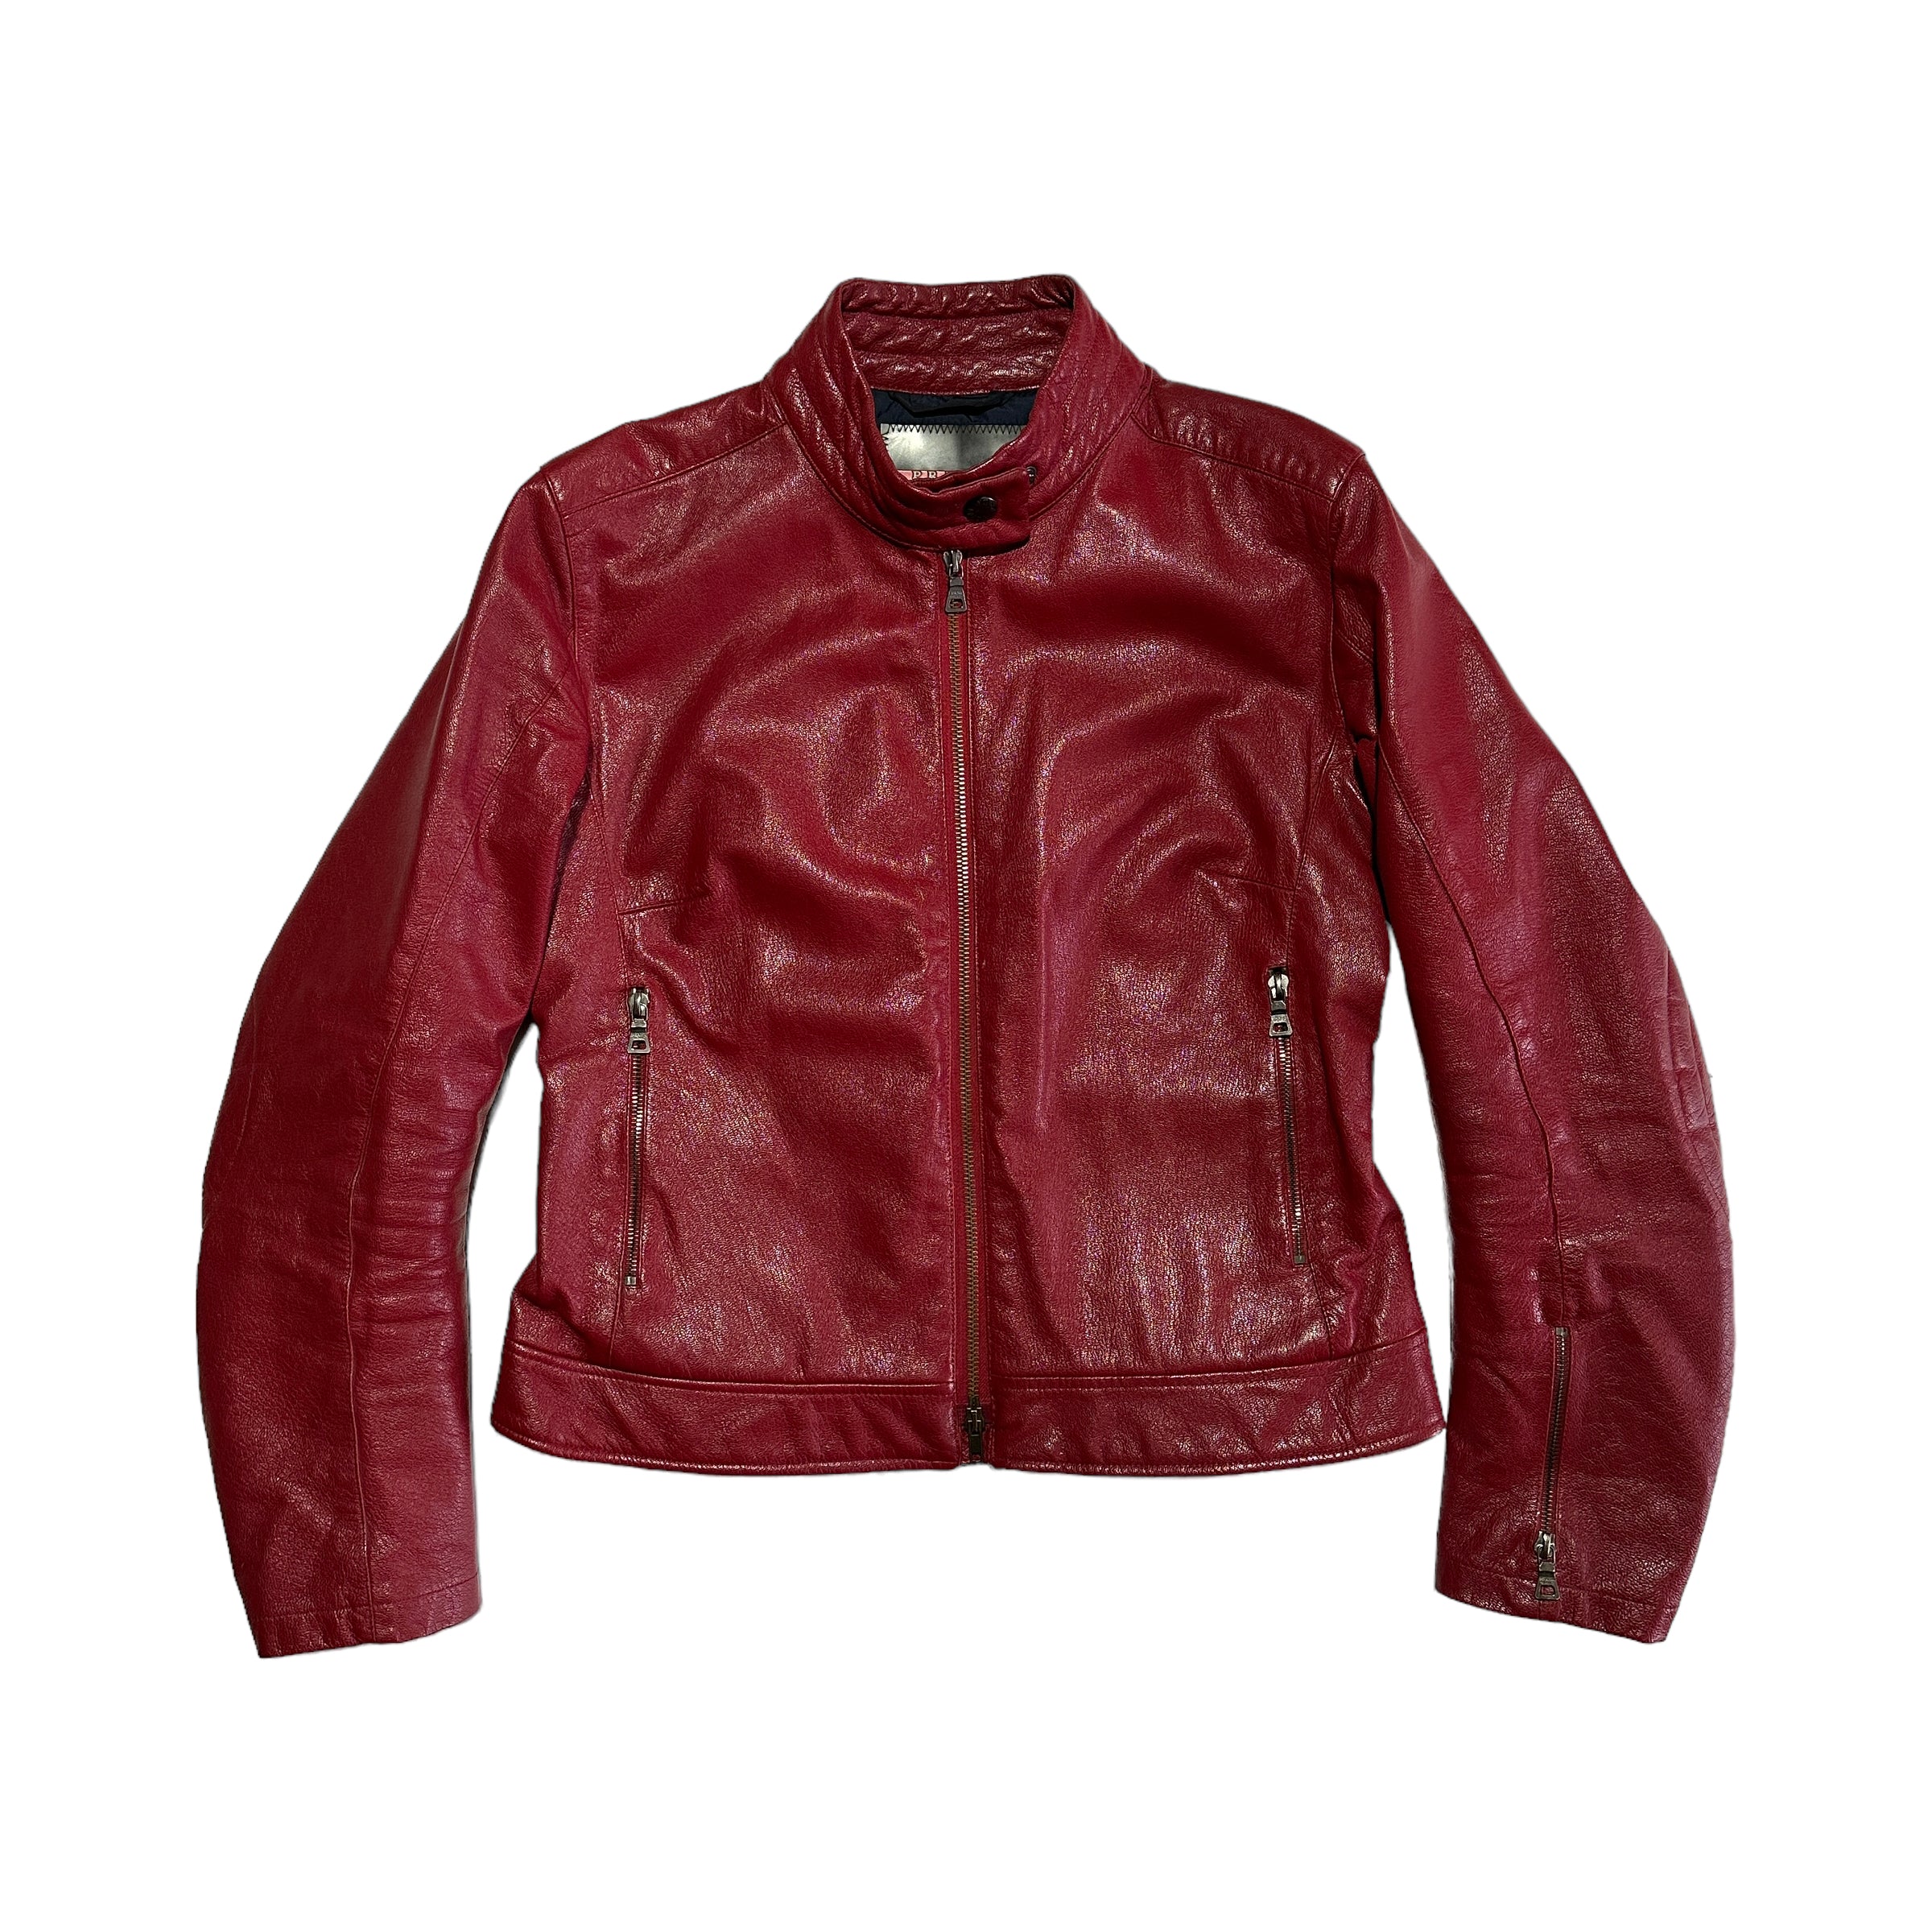 S/S 2000 Leather Jacket, (46)